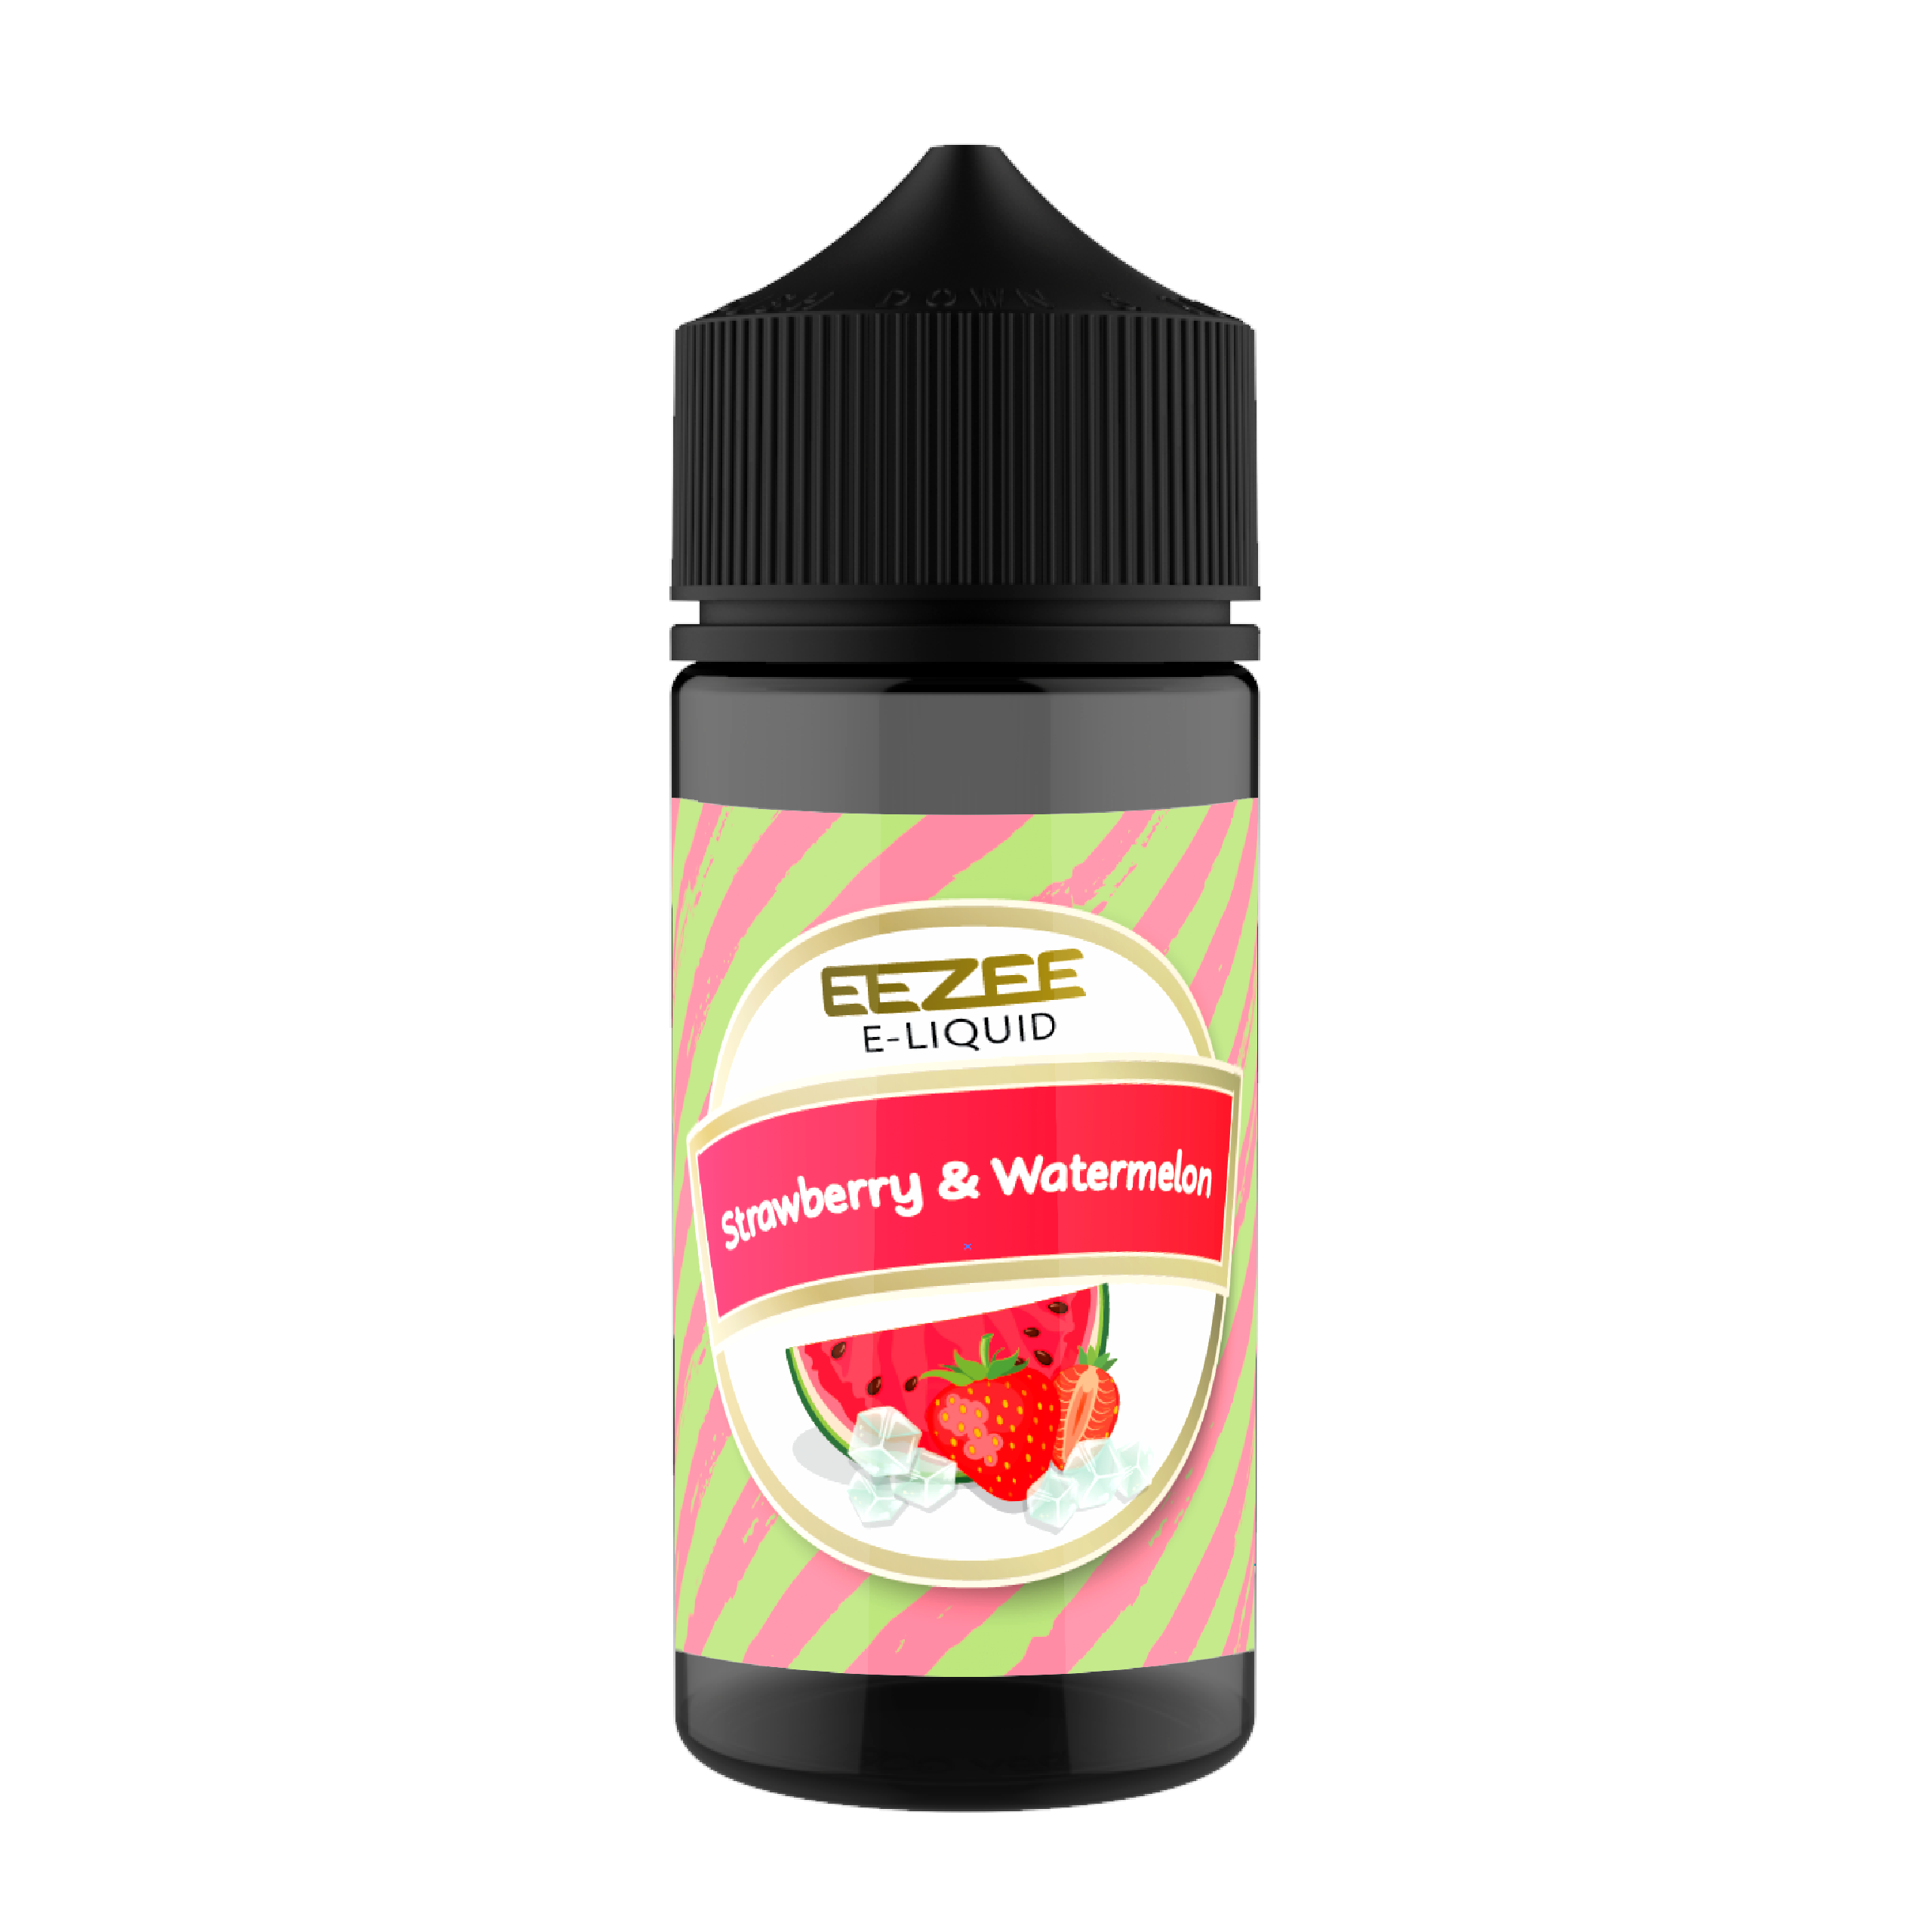 Strawberry & Watermelon 100ml by Eezee E-liquid